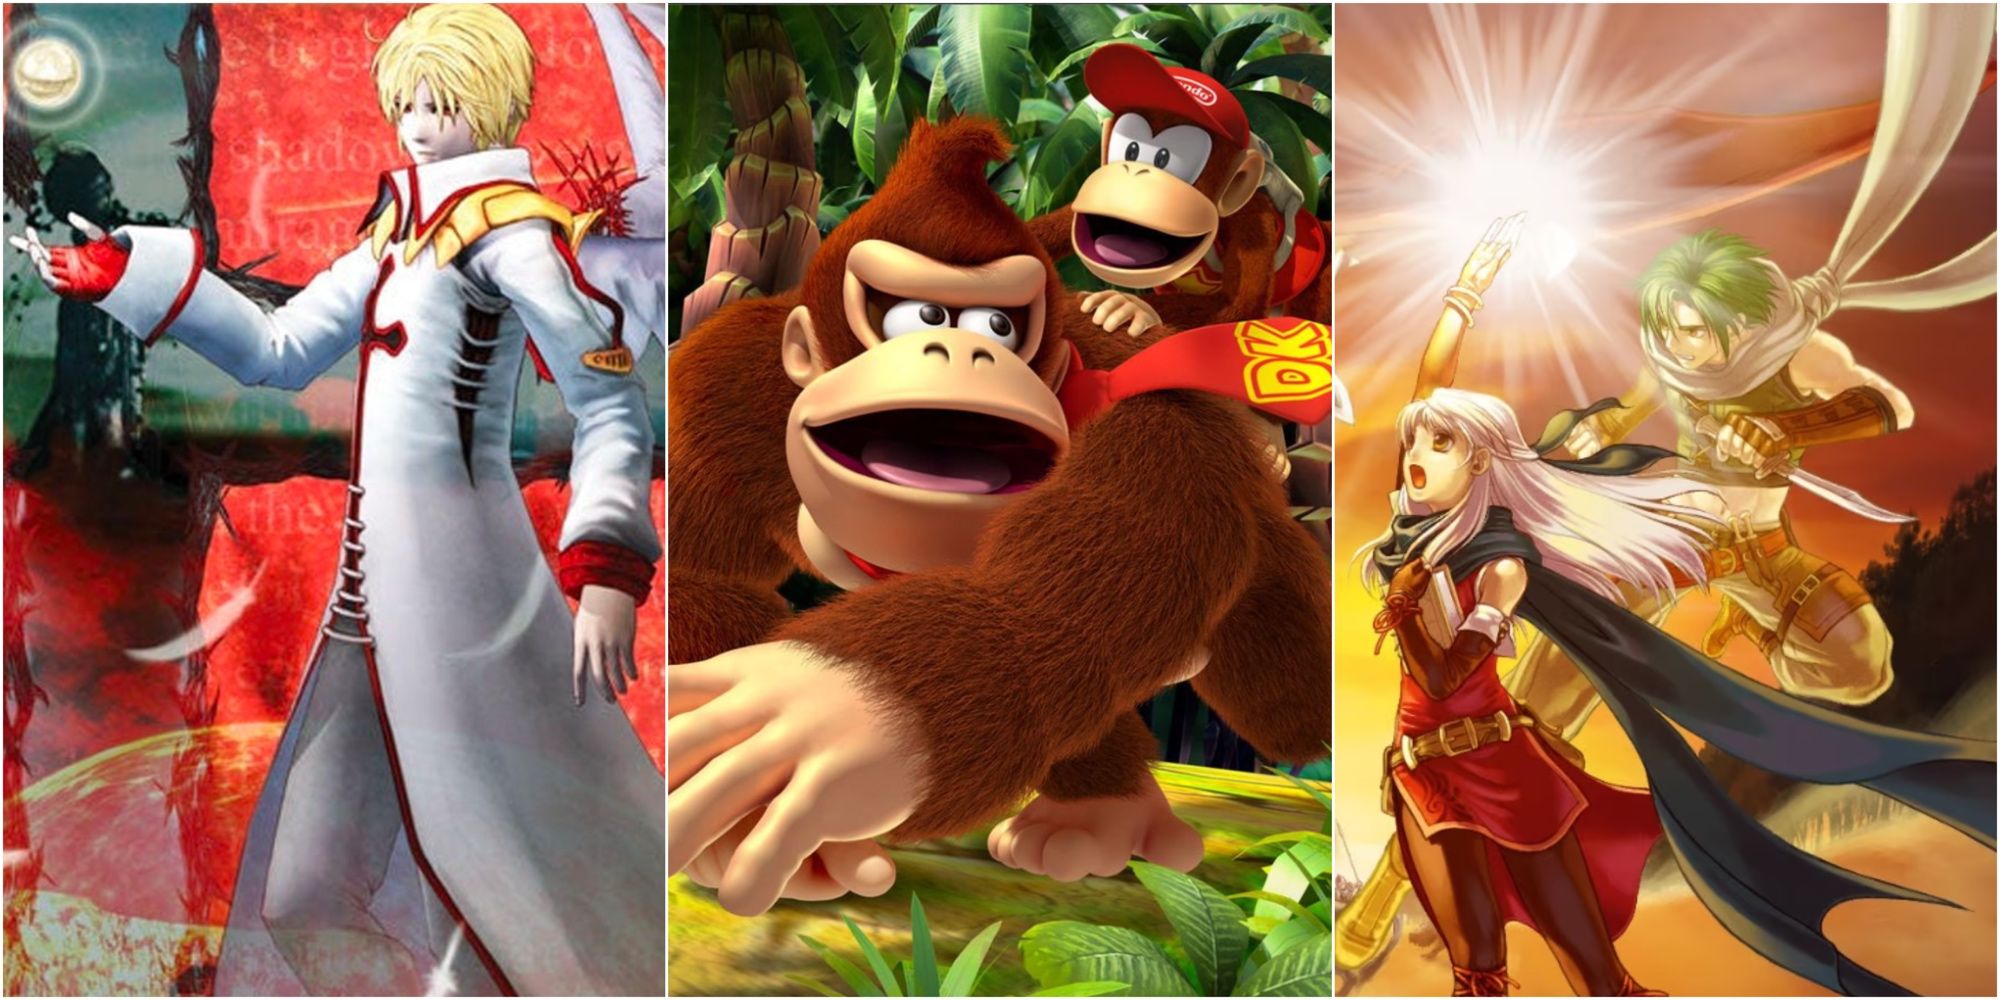 Split image of Baroque, Donkey Kong Returns, and Fire Emblem Radiant Dawn box art